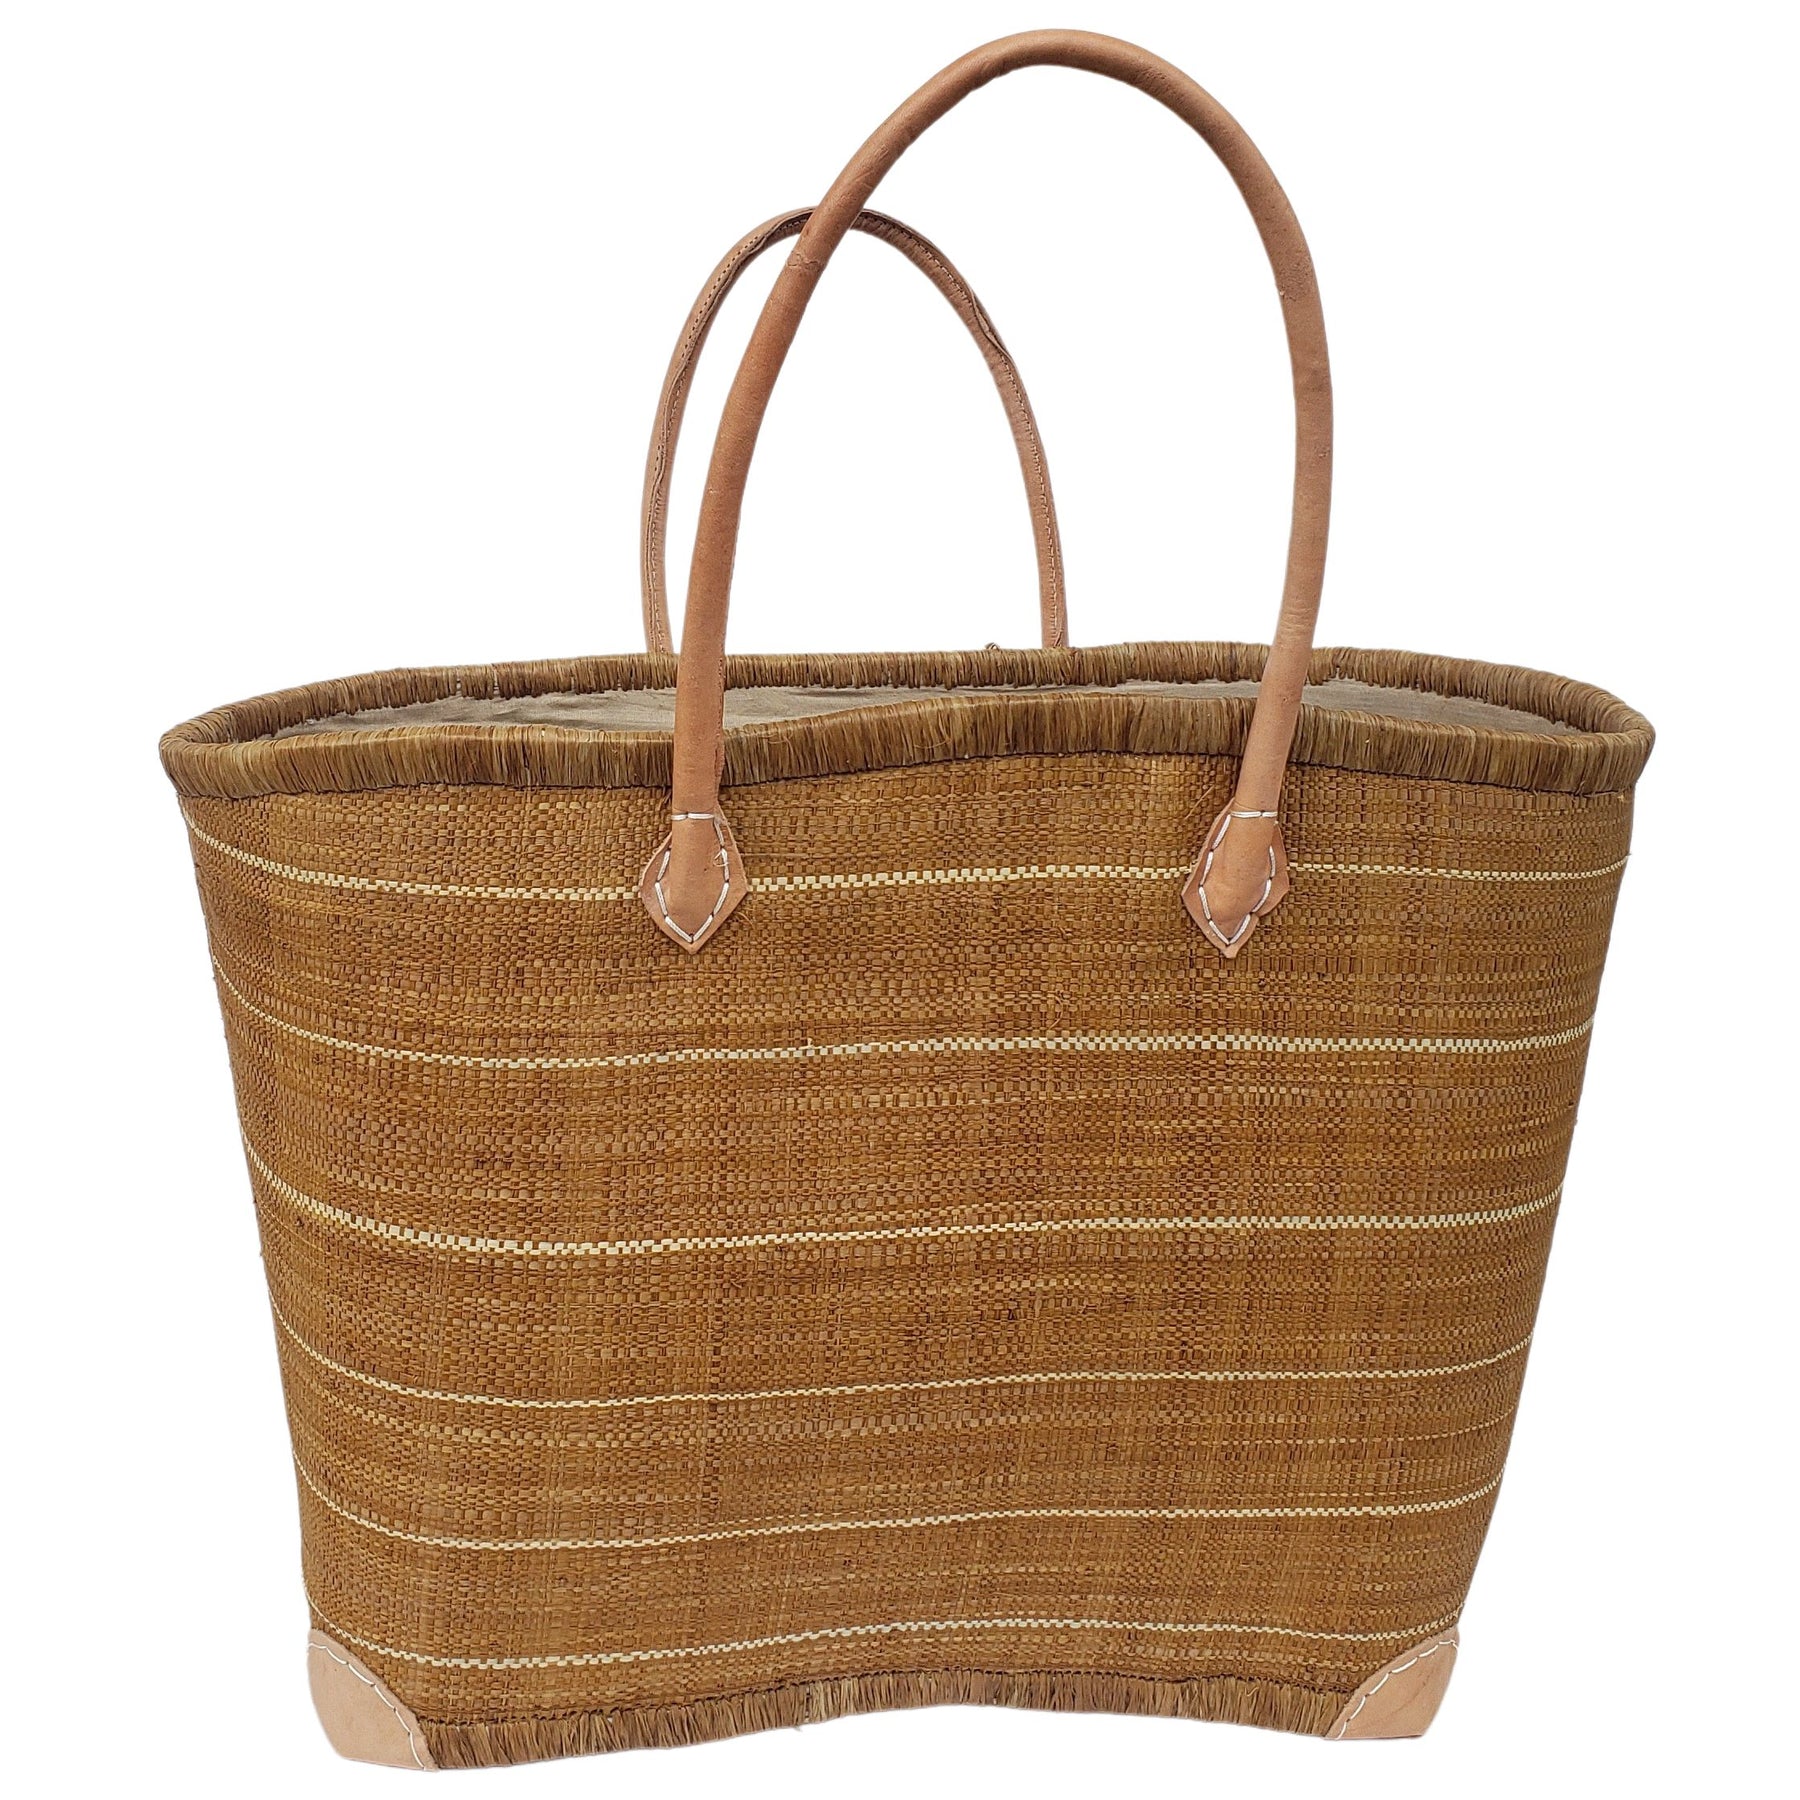 41 of 59: Adjanie: Authentic Madagascar Raffia and Leather Tote Bag (Brown Stripe)